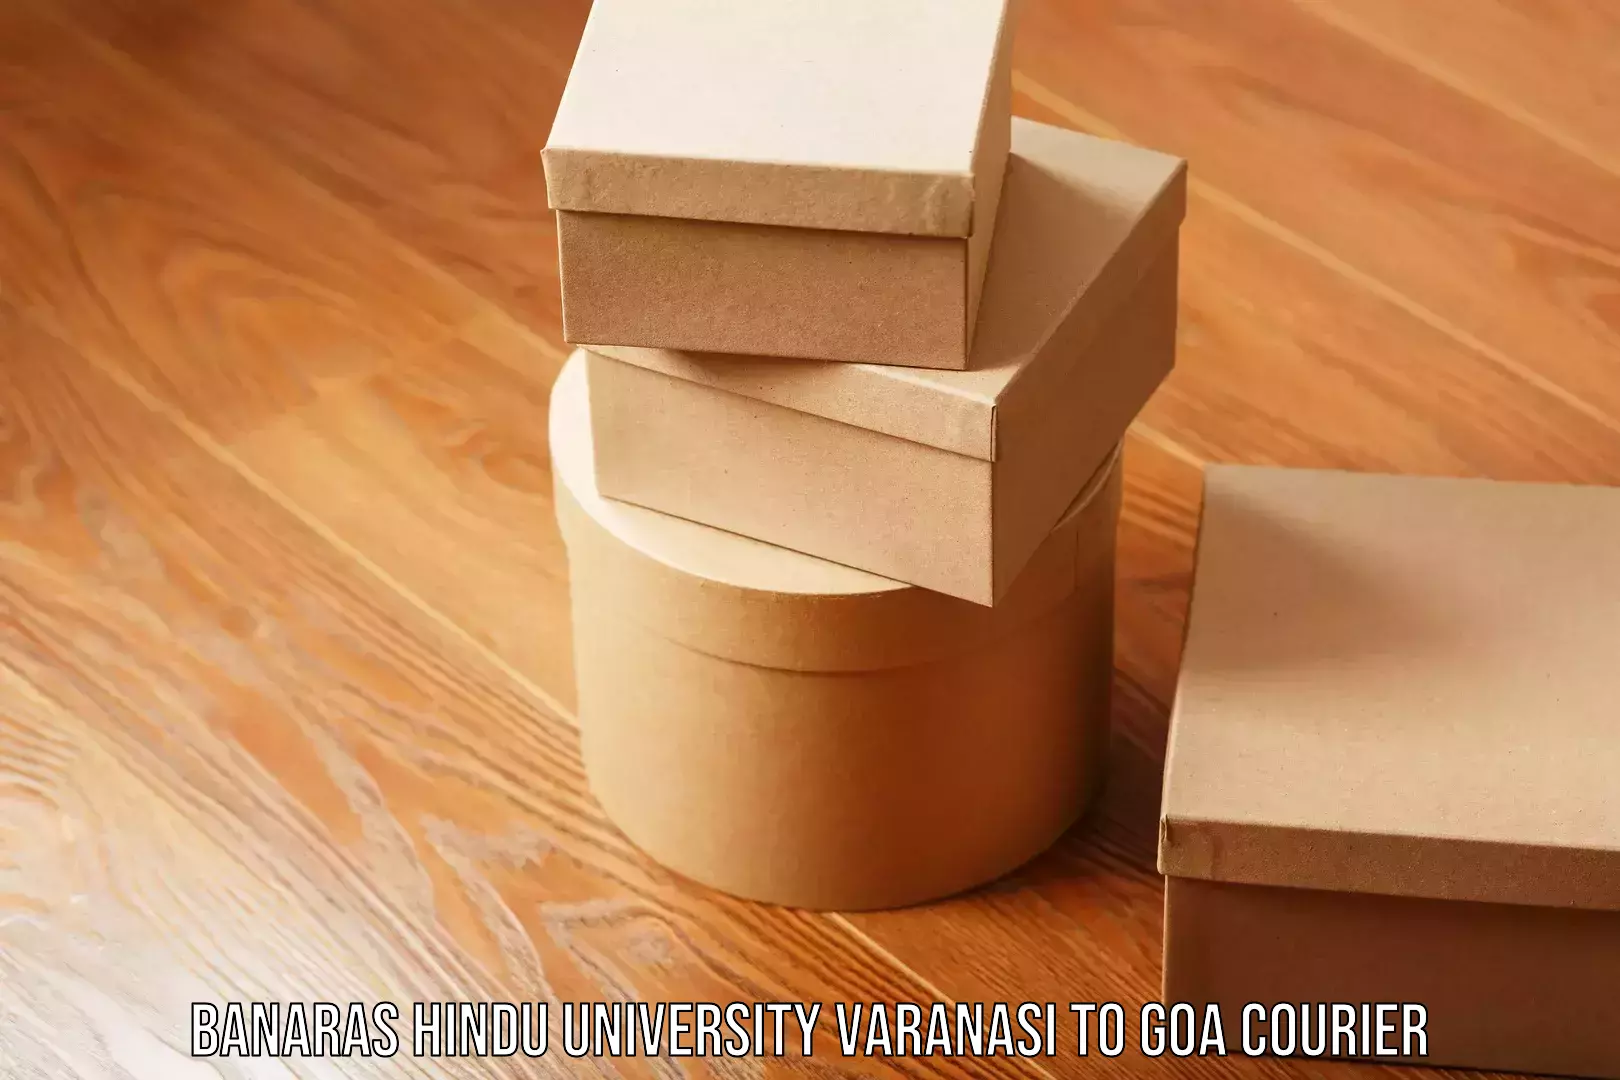 Multi-service courier options Banaras Hindu University Varanasi to Goa